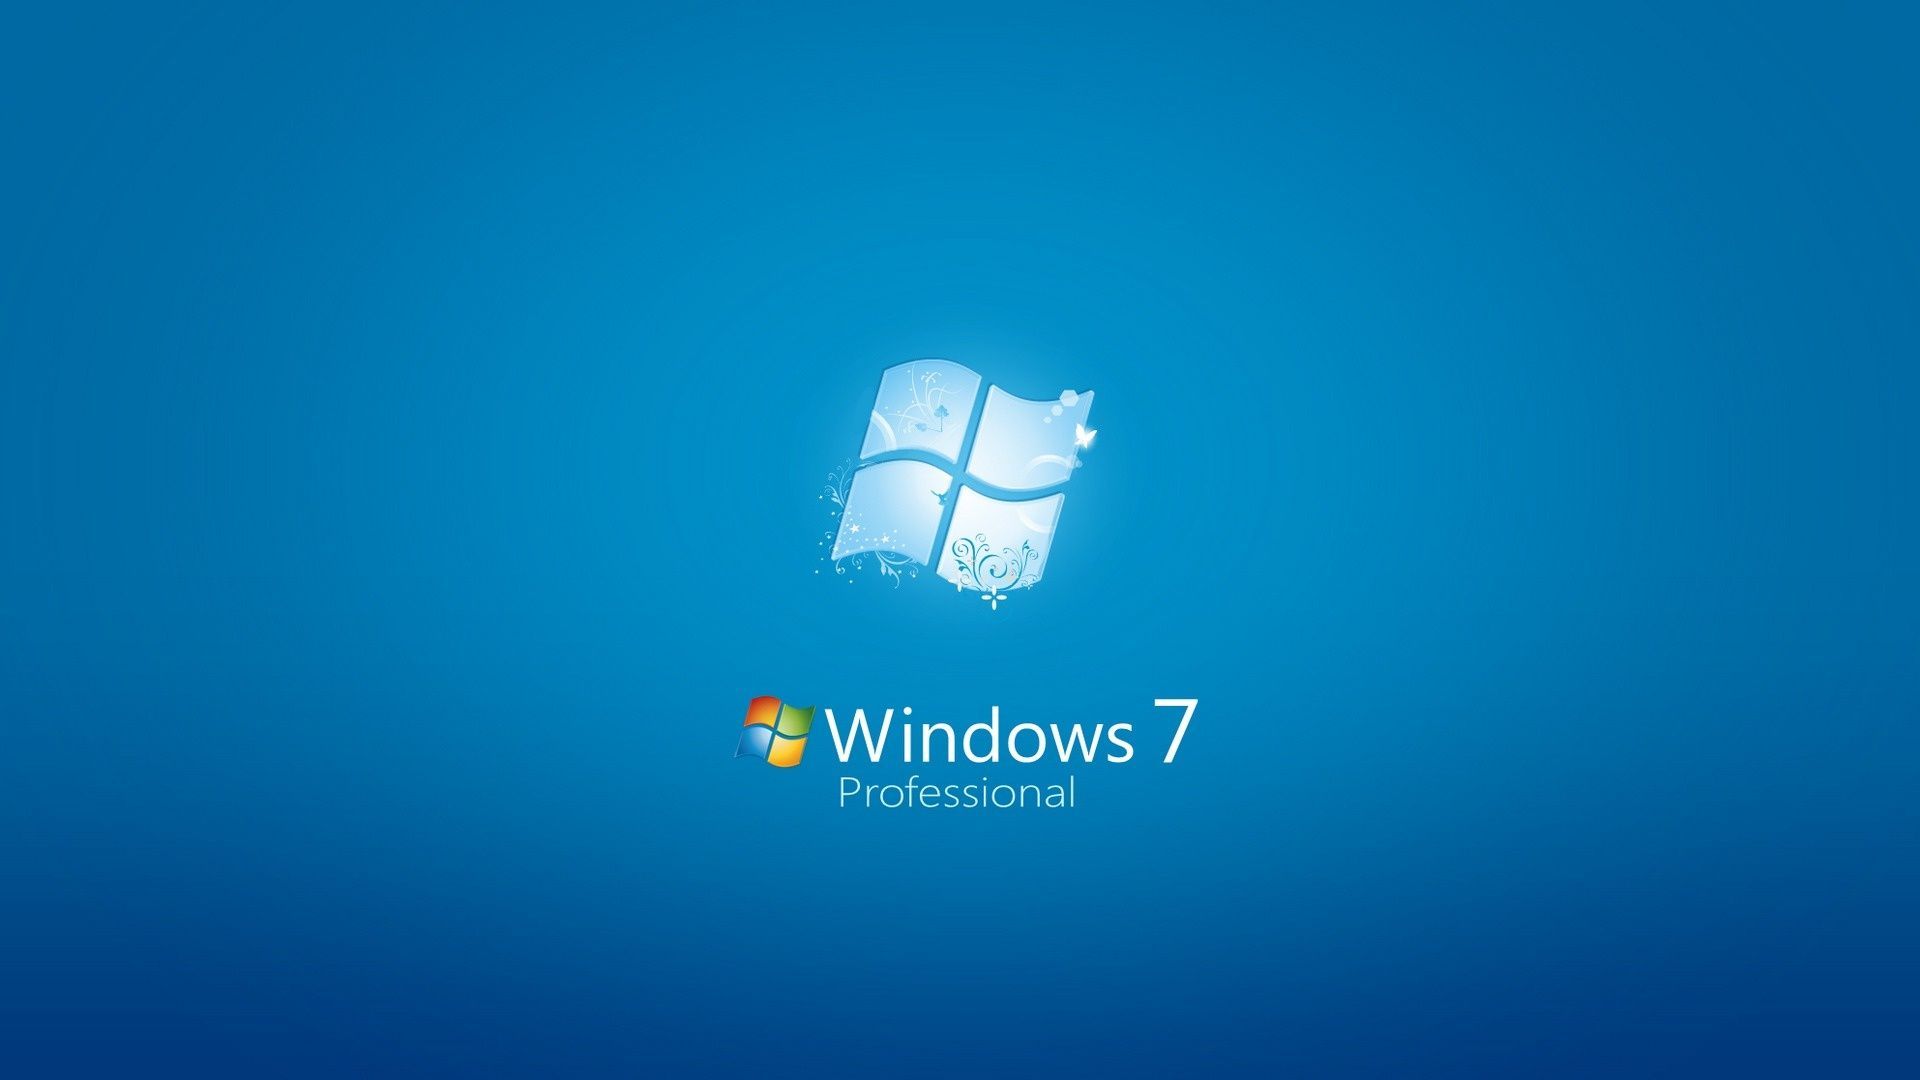 Live Wallpaper Windows 7 Ultimate - Windows 7 Professional - 1920x1080  Wallpaper 